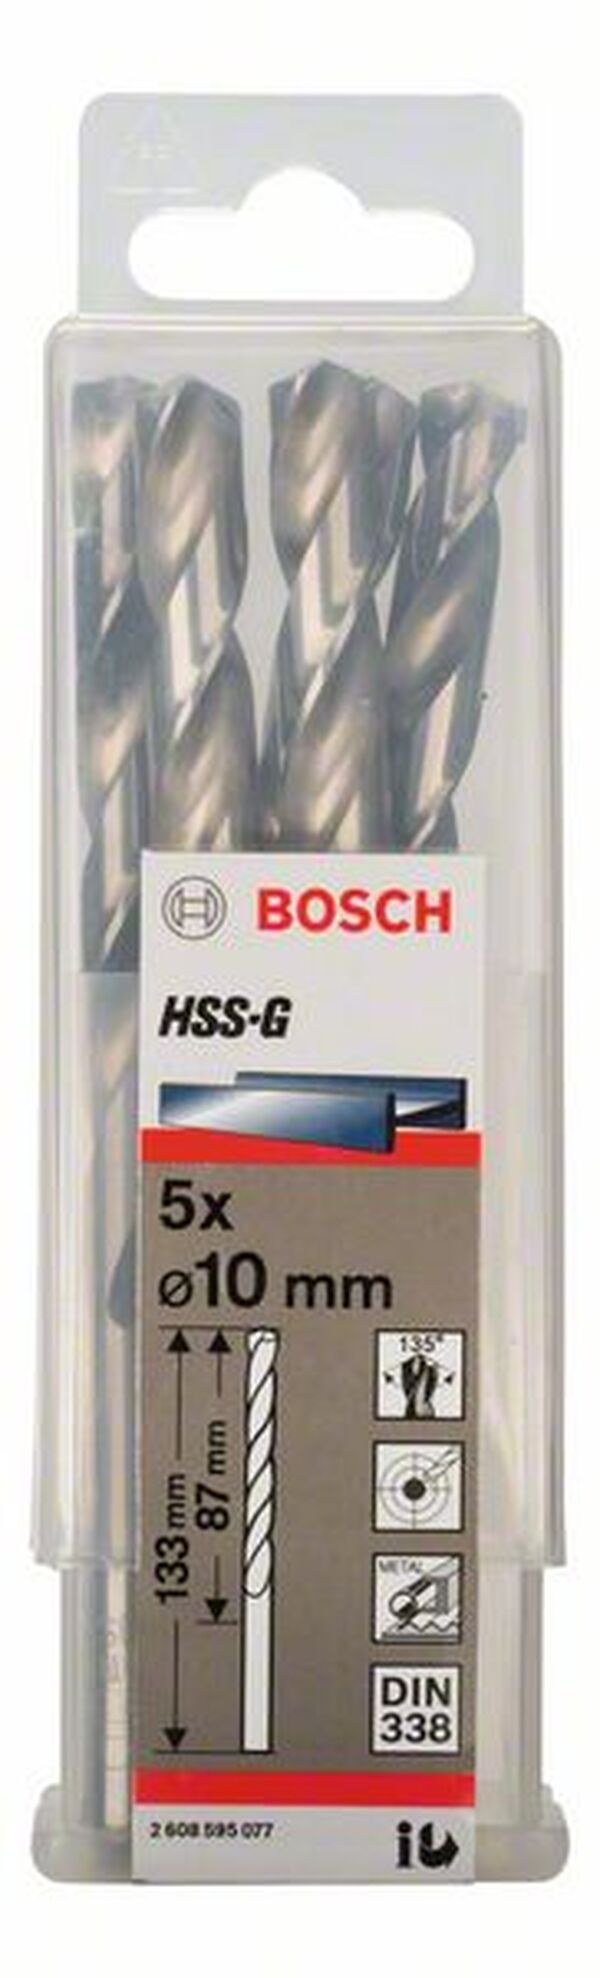 Сверло по металлу Bosch Eco 5 HSS-G 10мм 2608595077